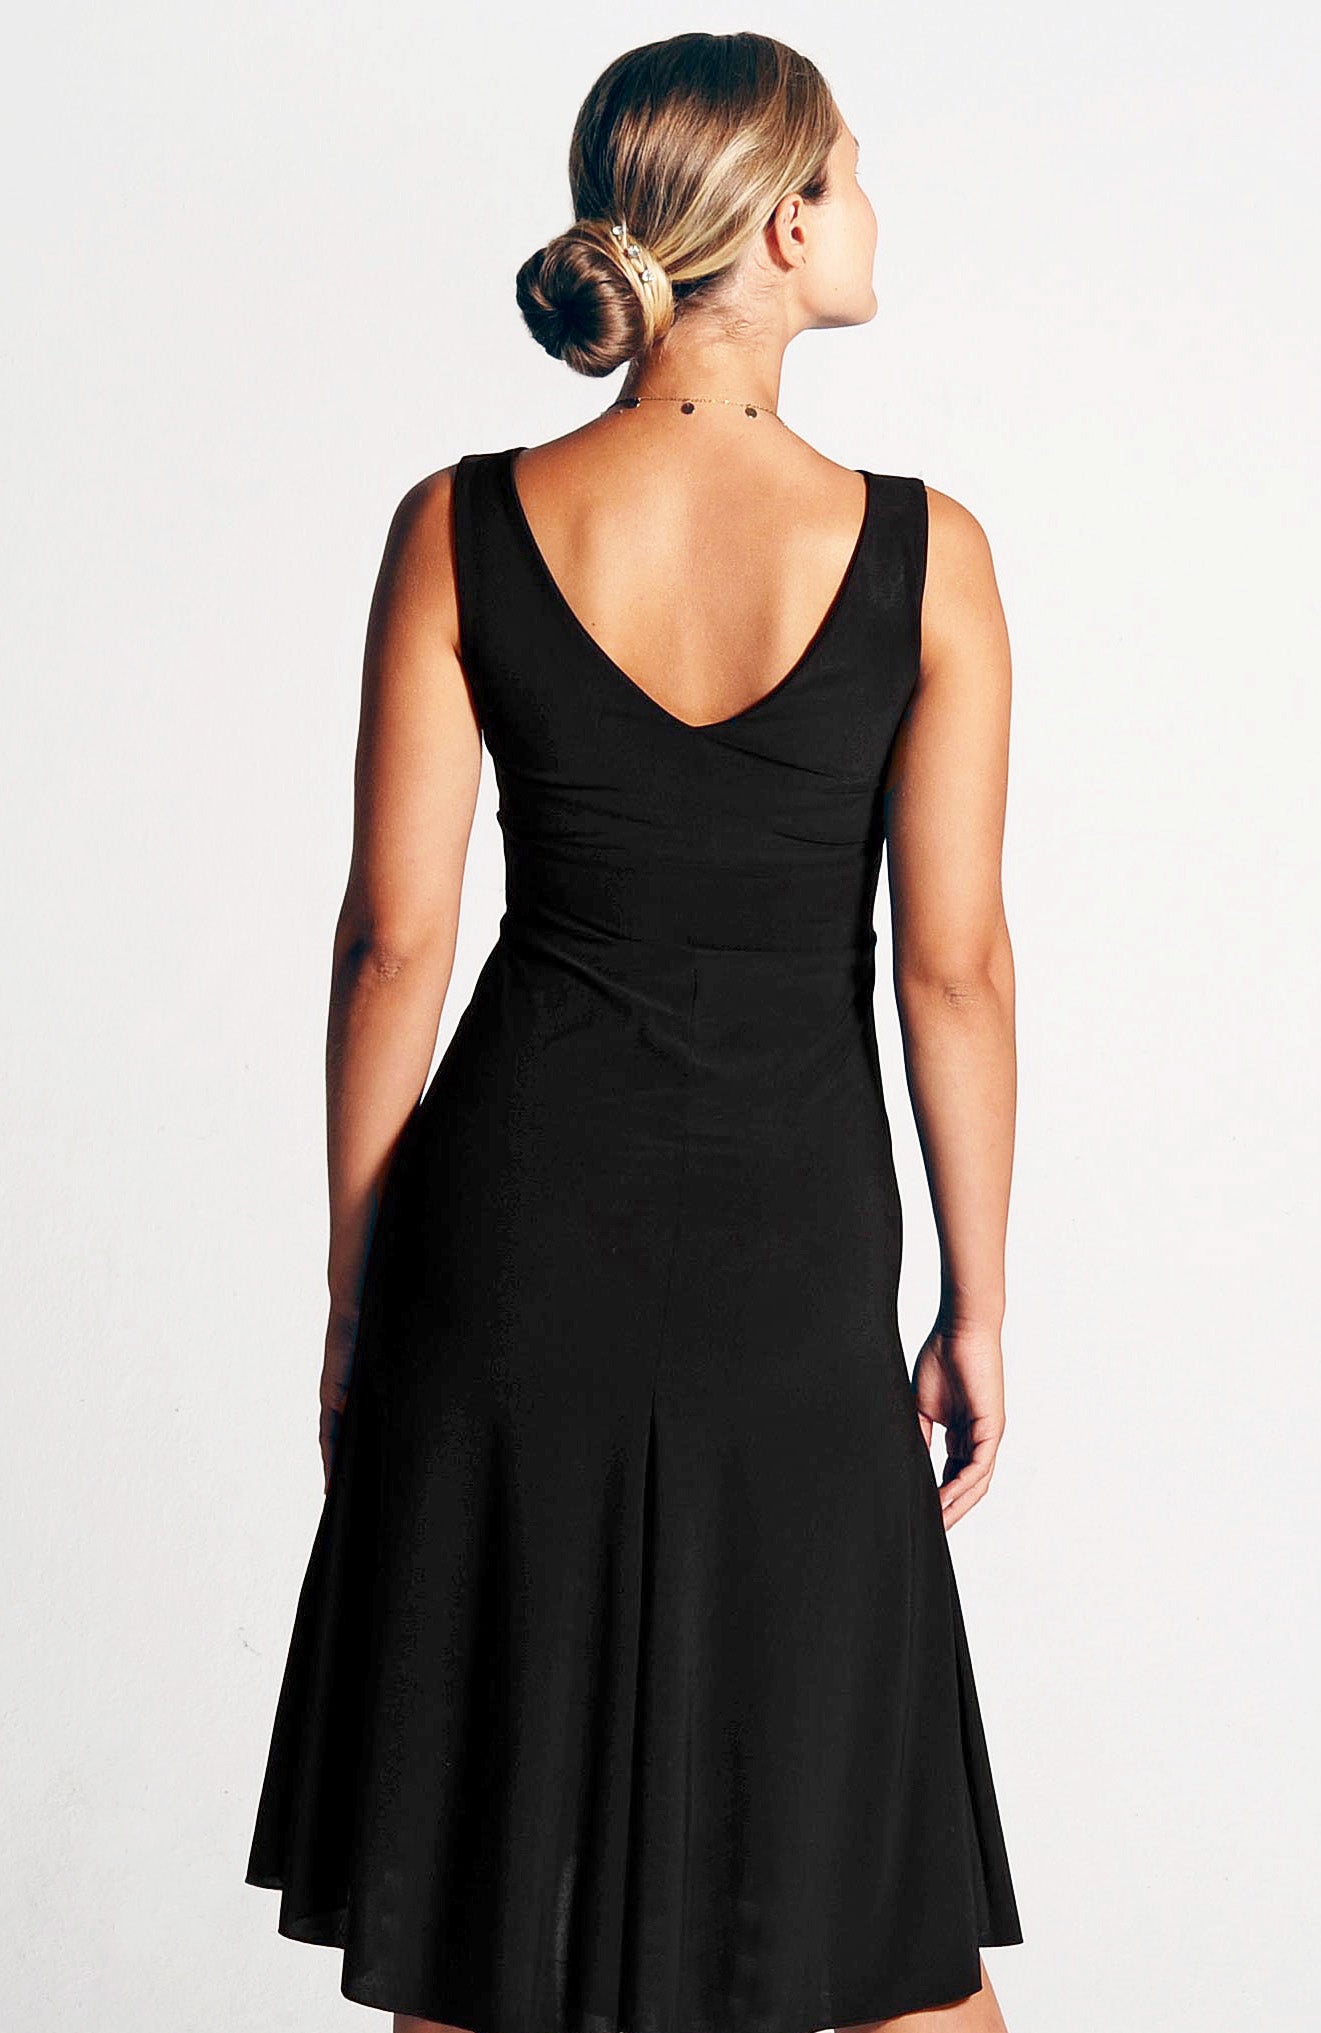 CARLA - Classic Black Tango Dress